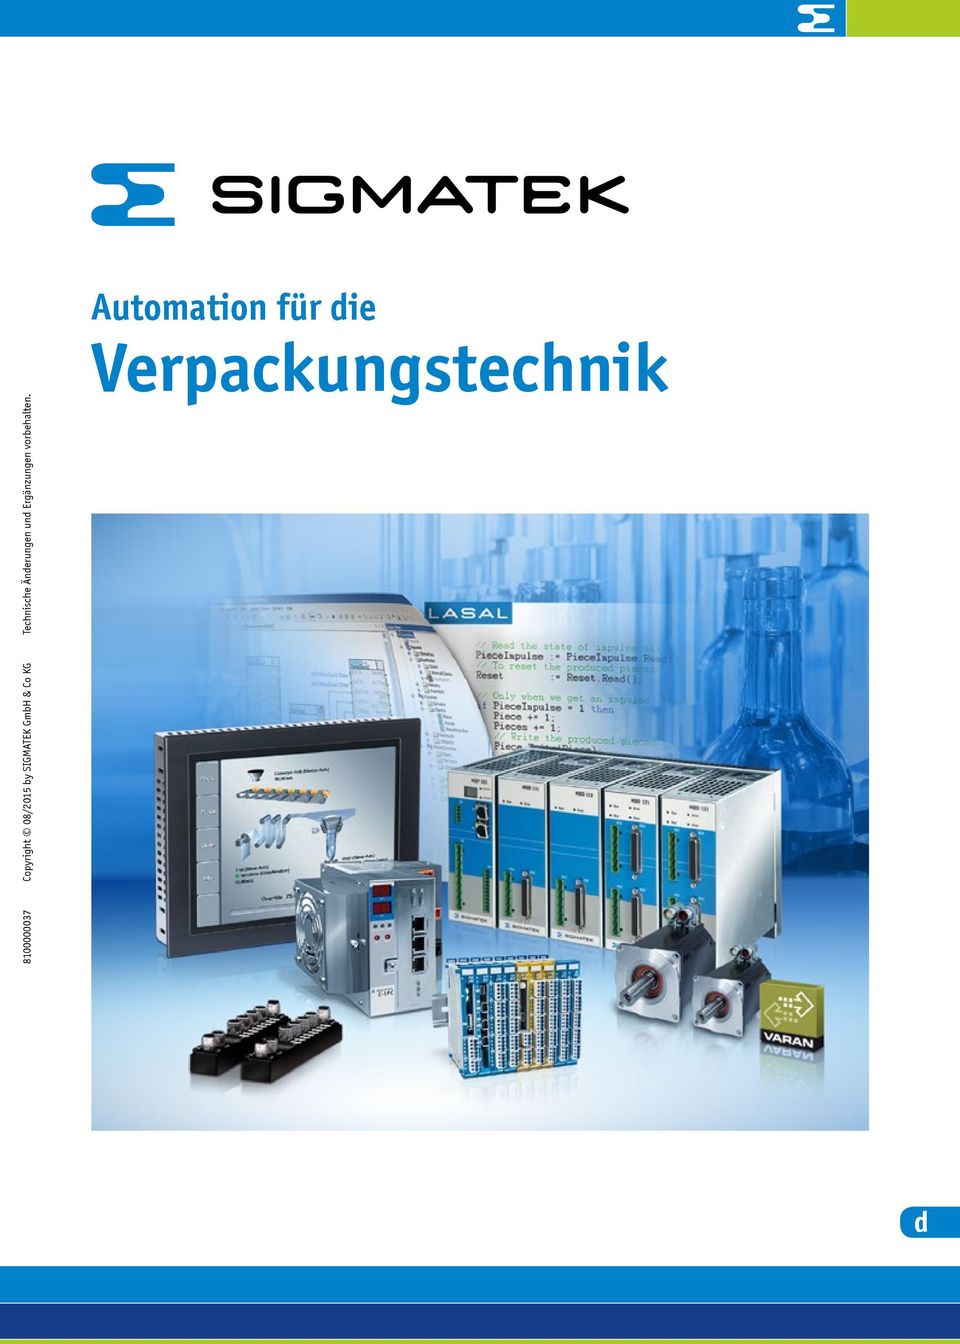 Copyright 08/2015 by SIGMATEK GmbH